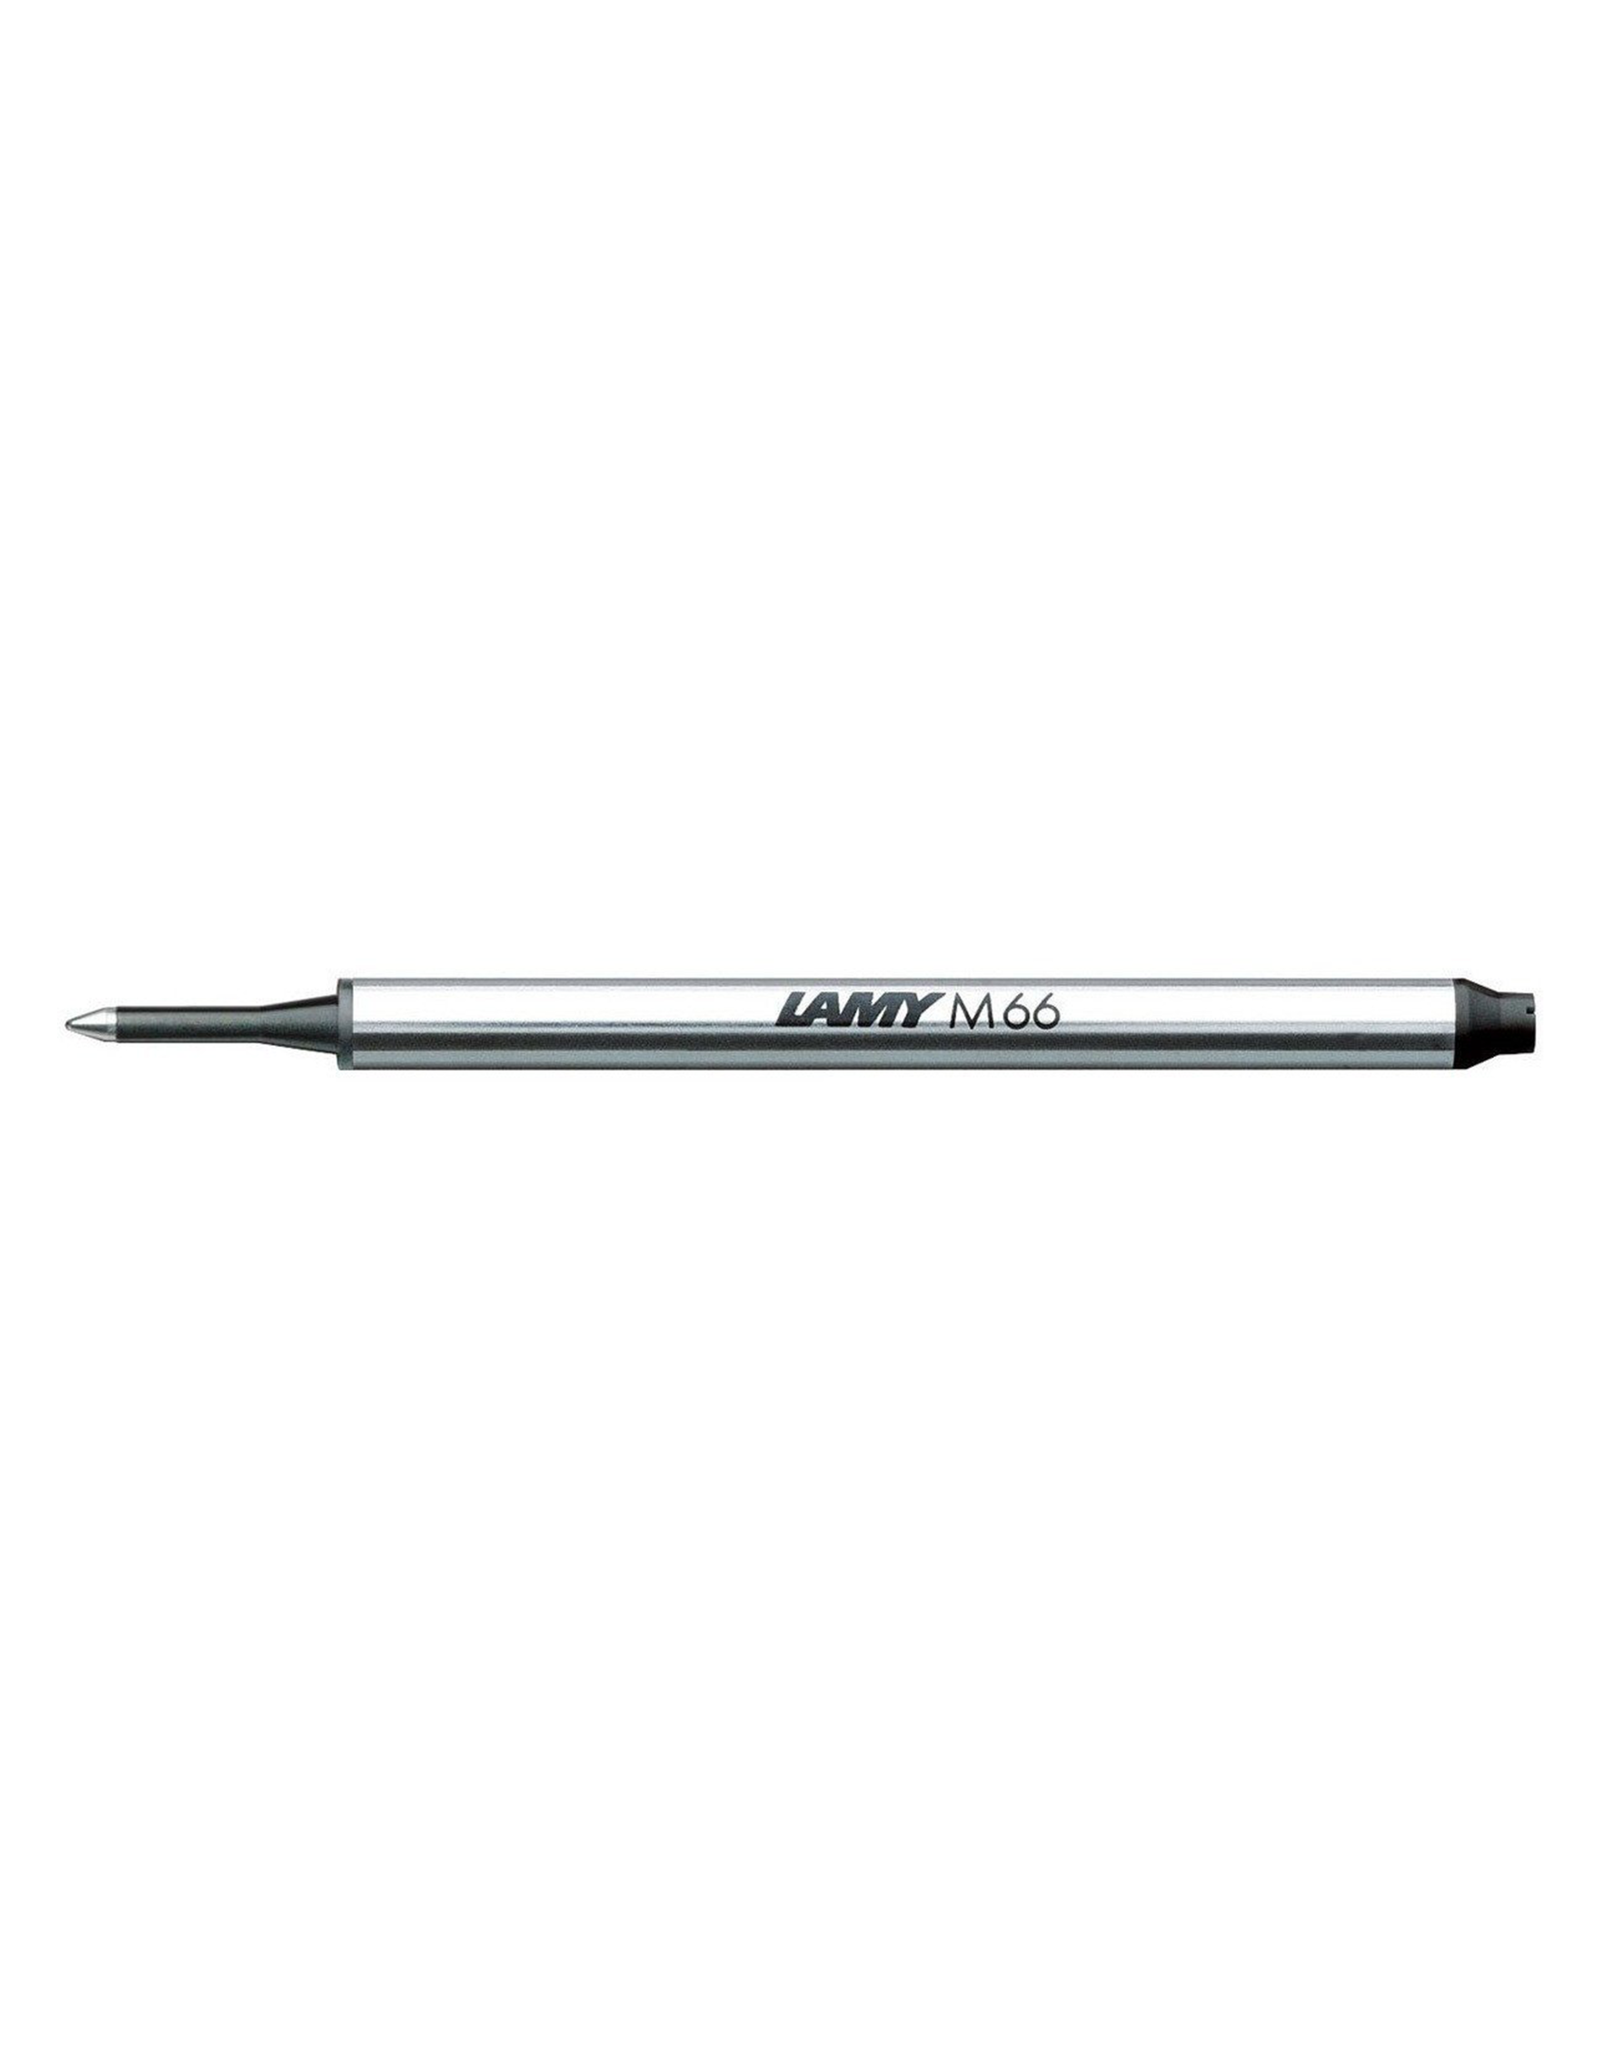 LAMY M66 Rollerball Pen Refill, Black